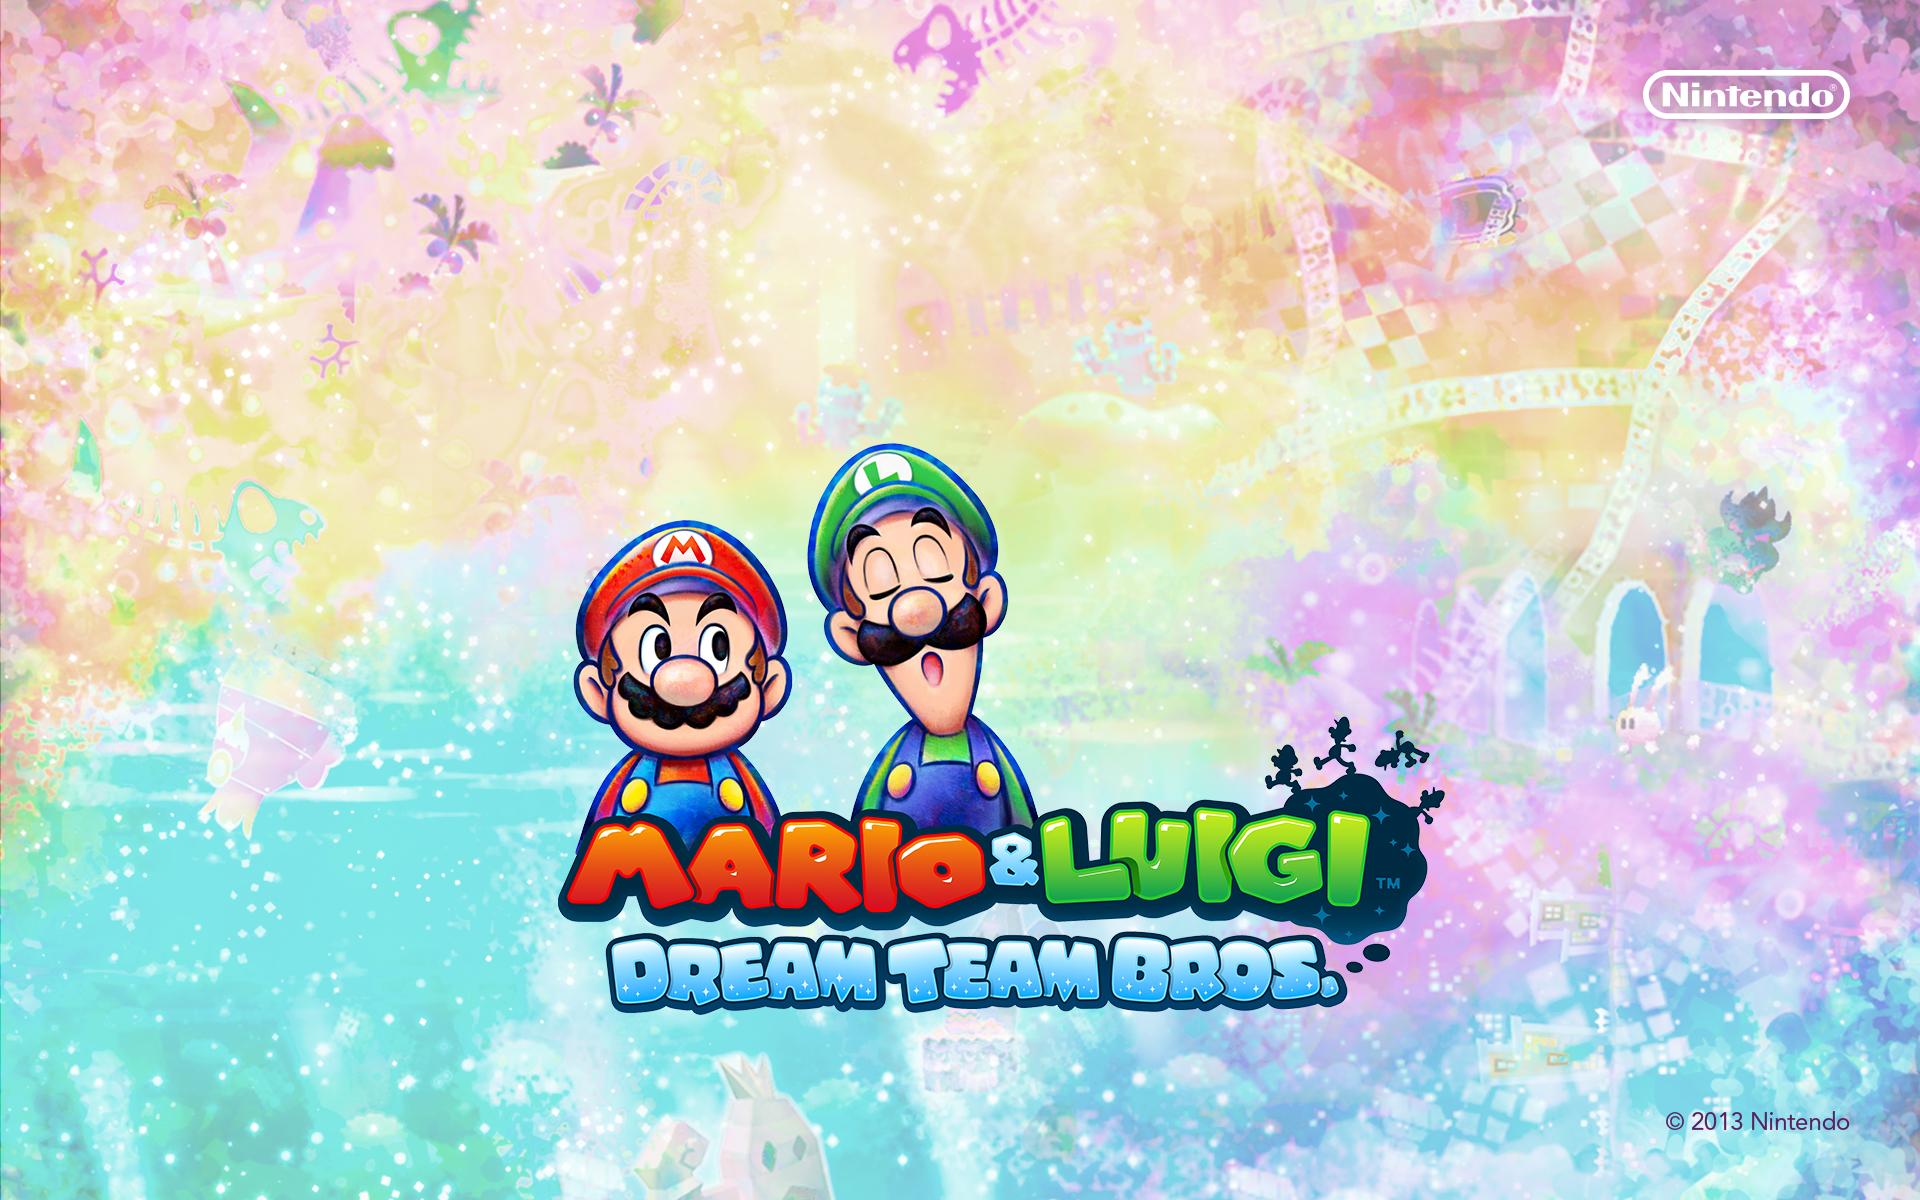 Mario And Luigi 4 Dream Team Bros - HD Wallpaper 